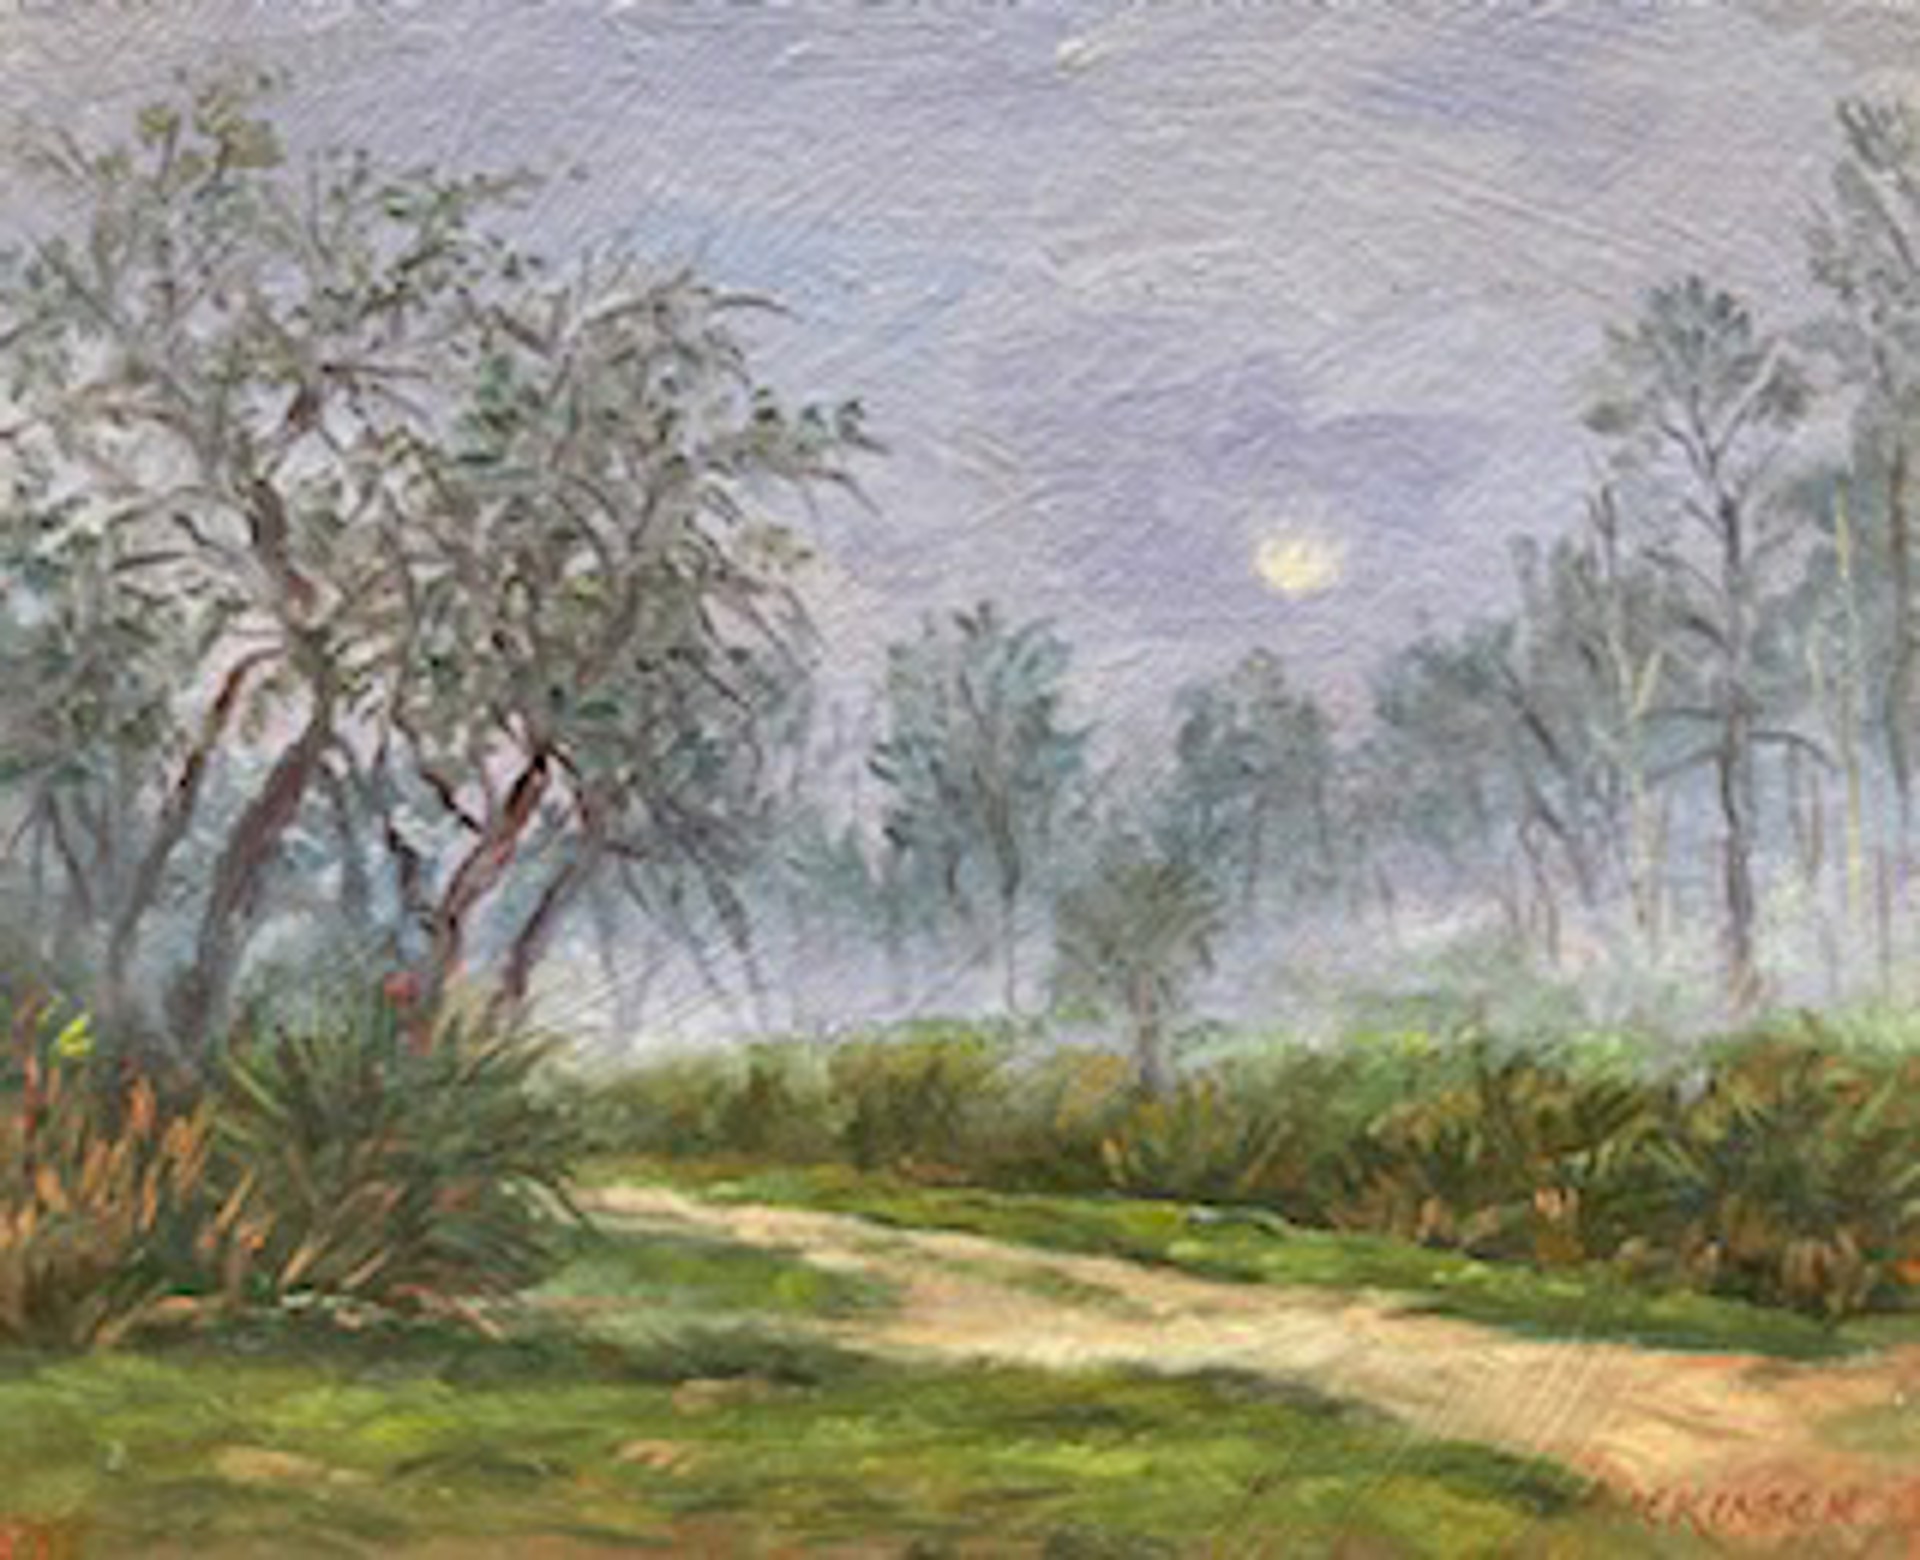 Wekiva Mist by Charles Dickinson